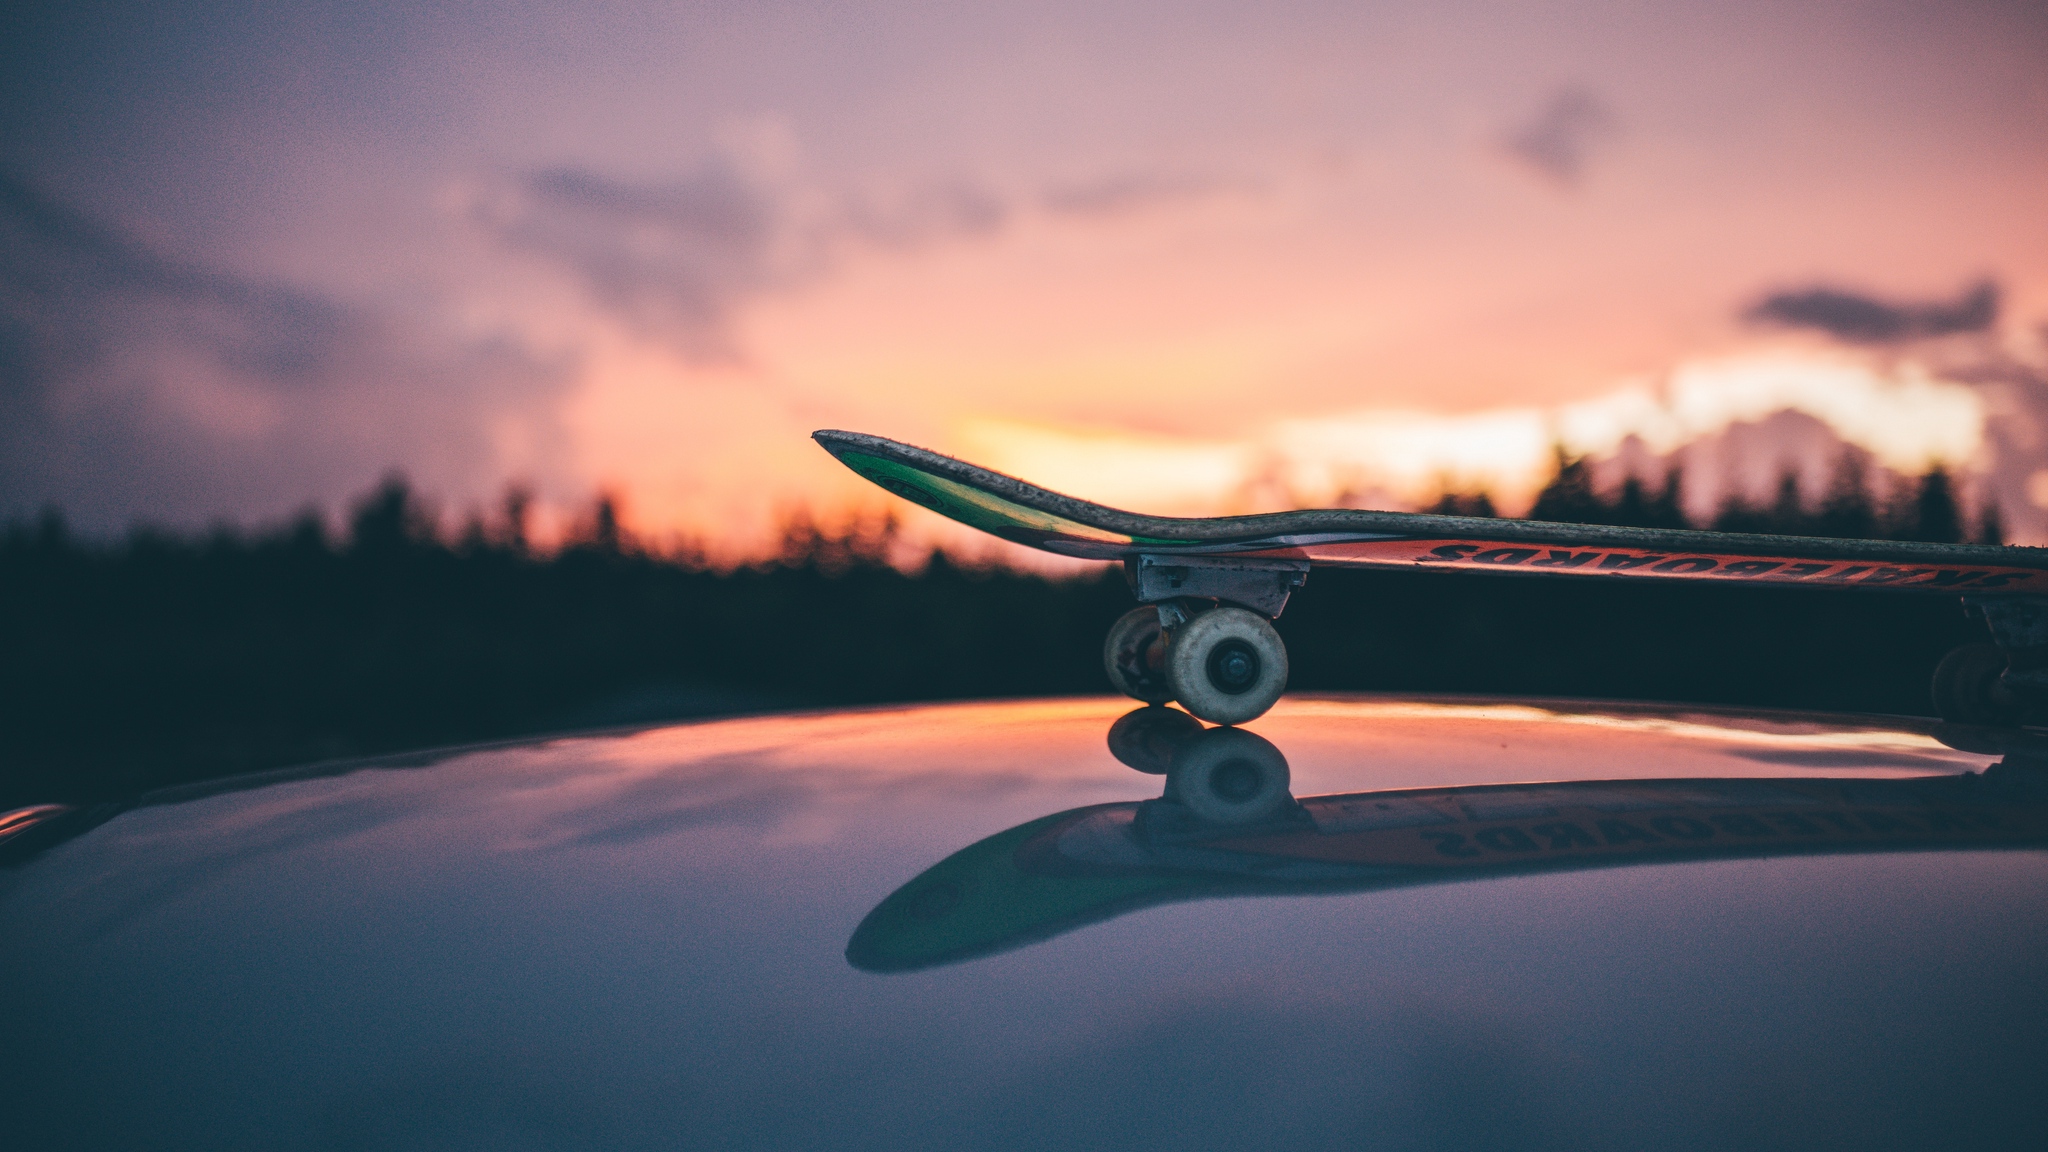 Wallpaper Skateboard, Sunset, Sky - Skateboard Wallpaper 4k - HD Wallpaper 